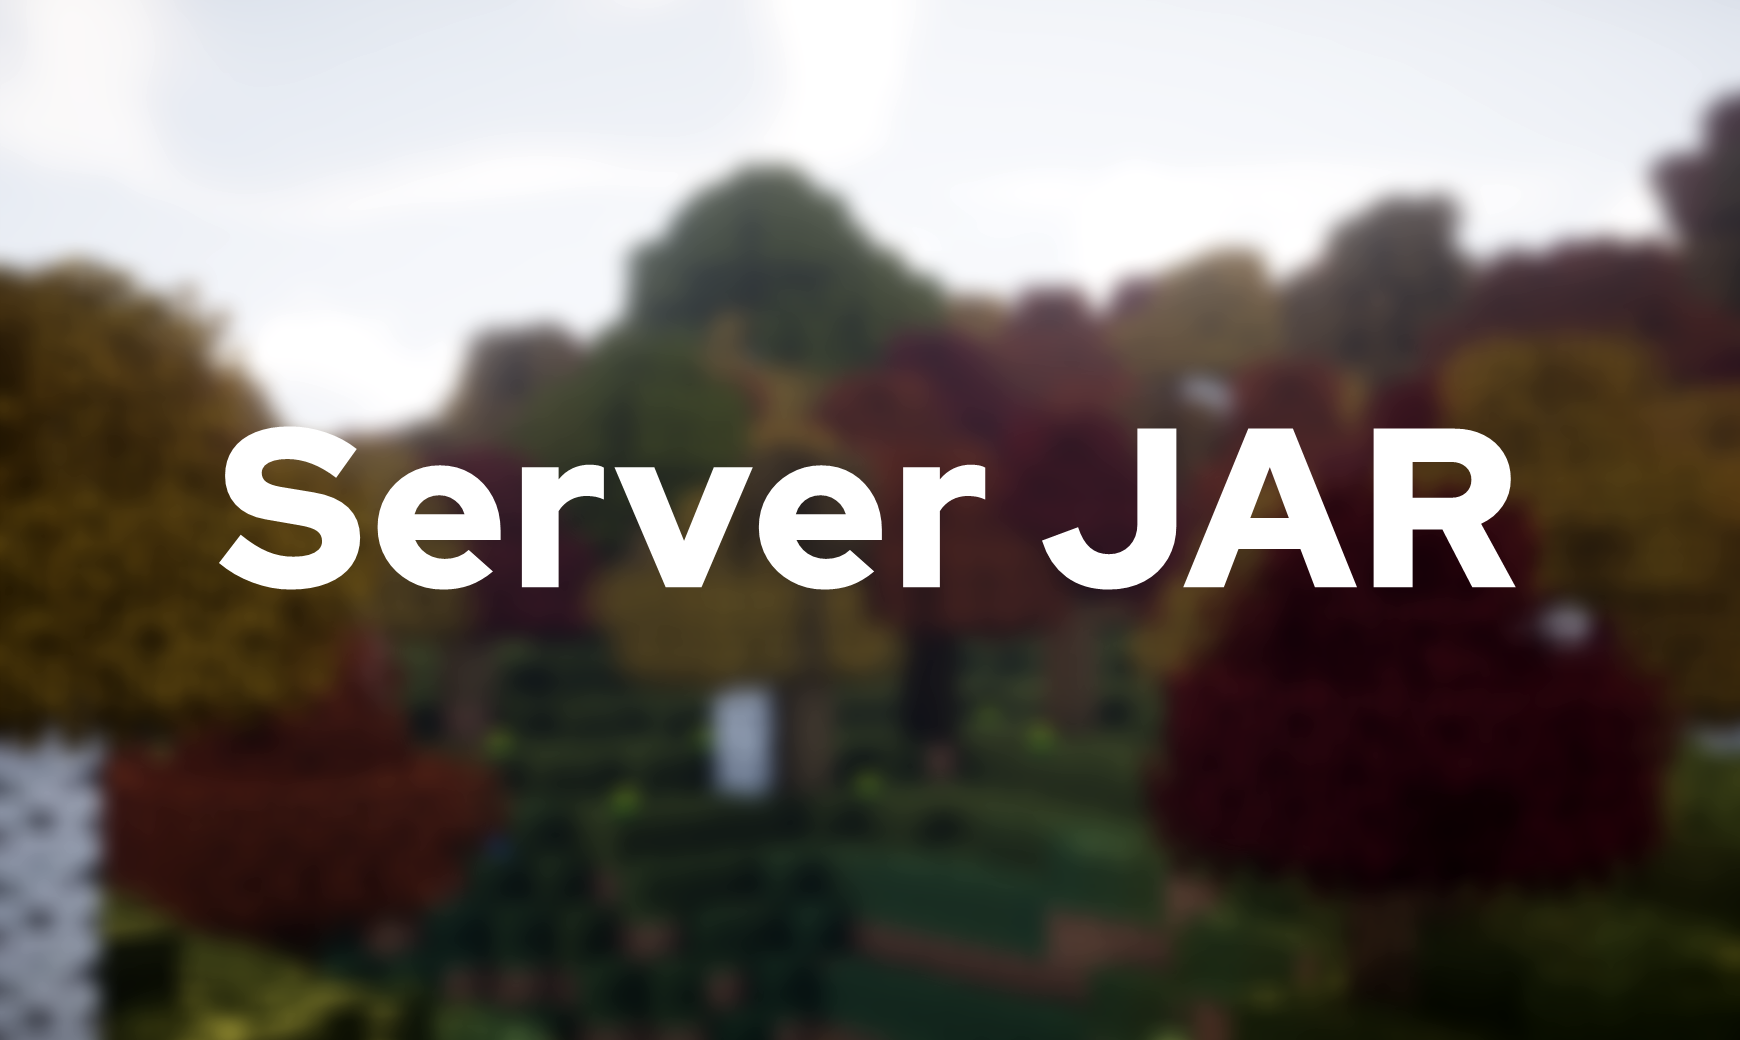 We finally have a server JAR for 1.16!